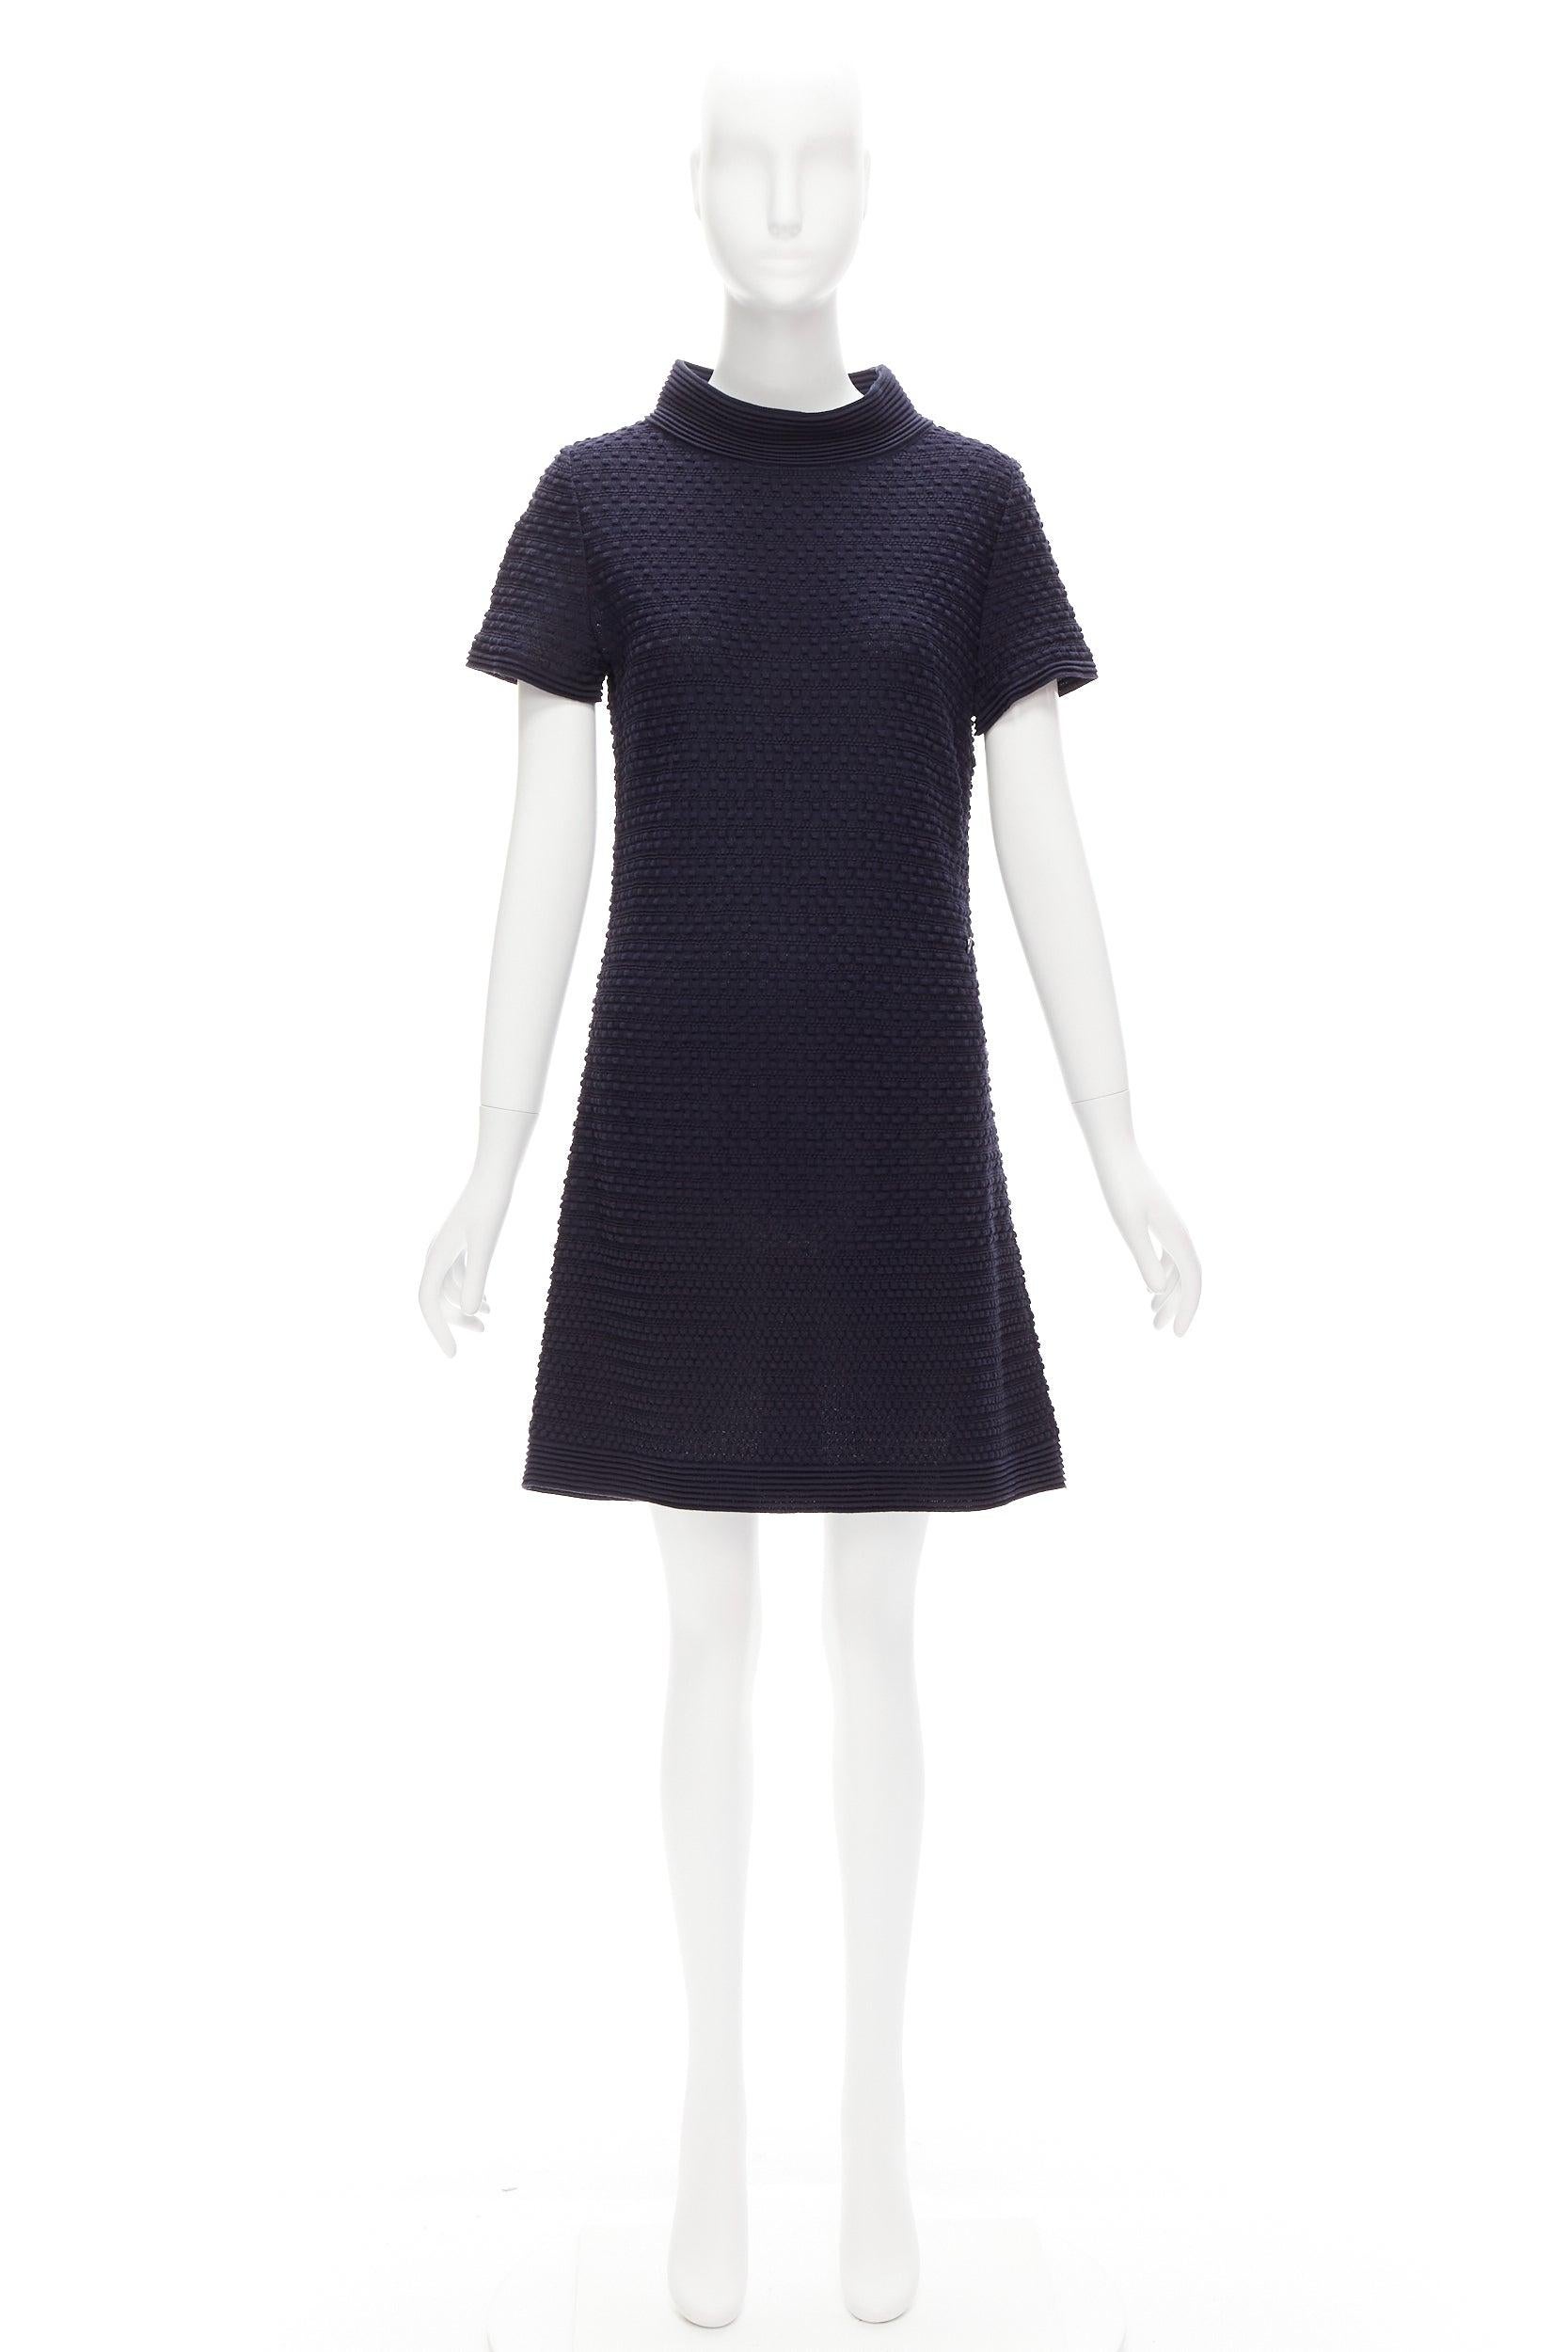 CHANEL navy CC logo button boat neck A-line knit mini dress FR38 M For Sale 6